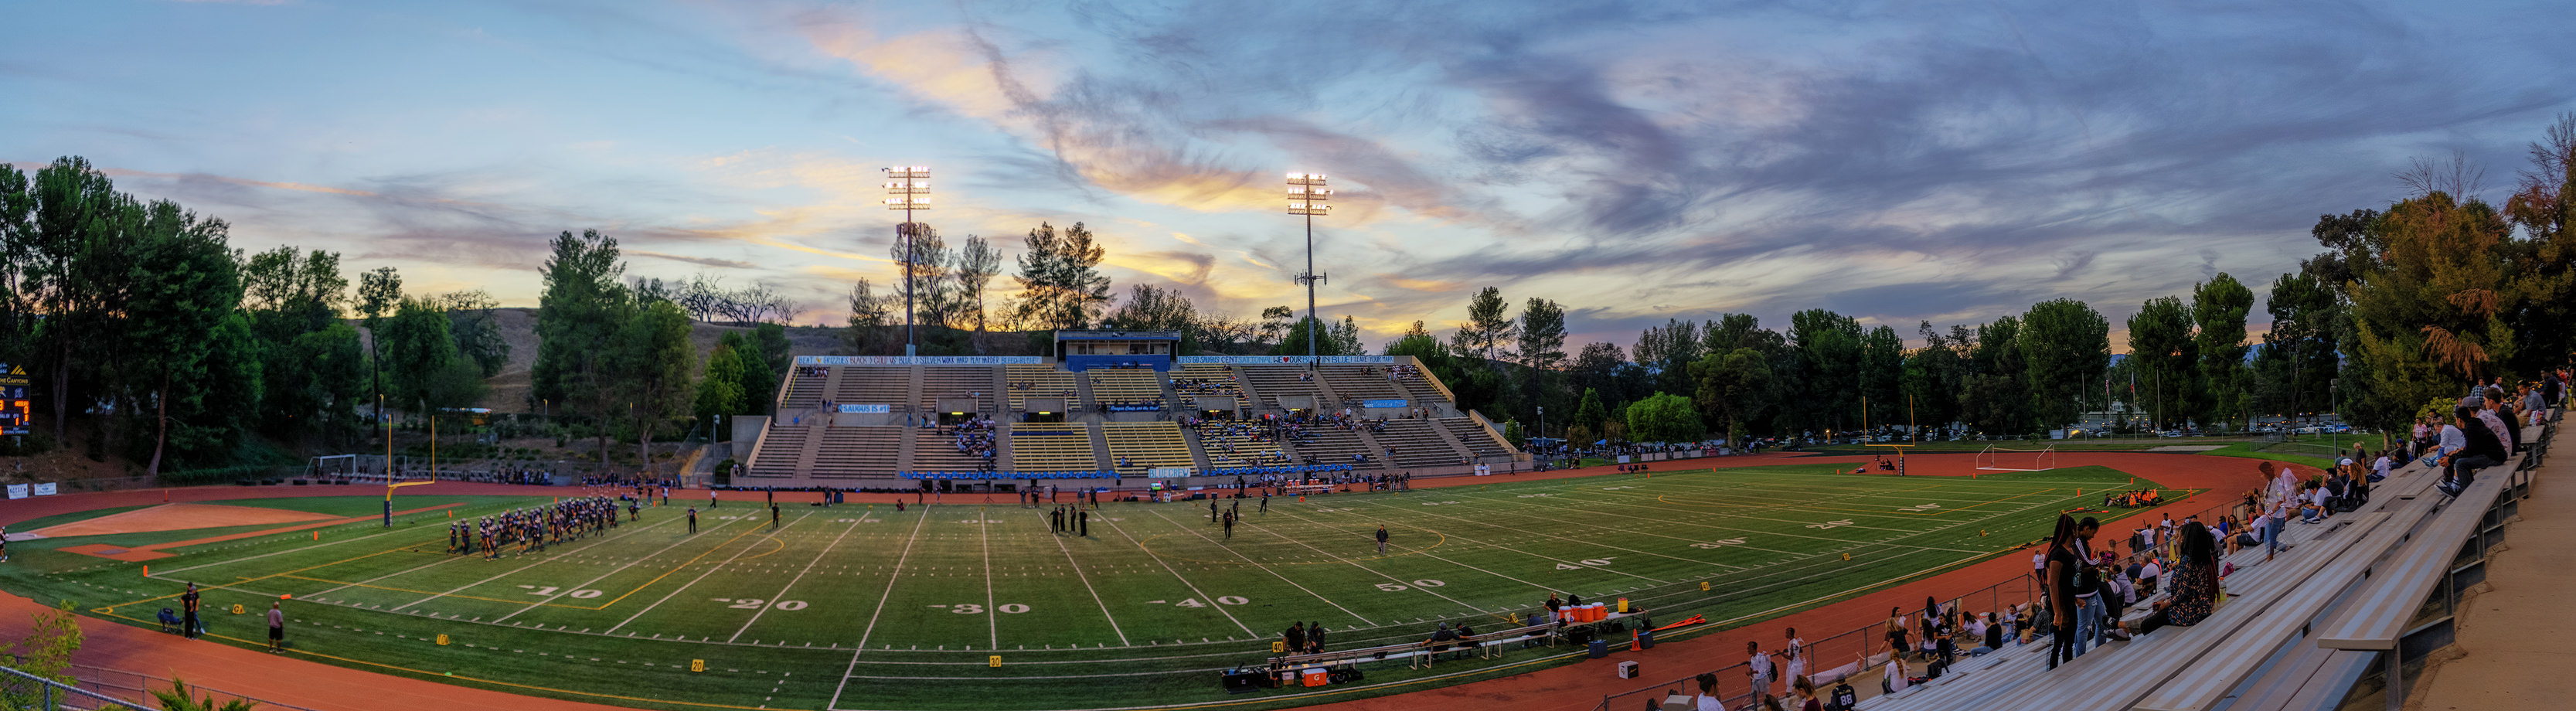 sunset at Golden Valley vs Saugus high school football